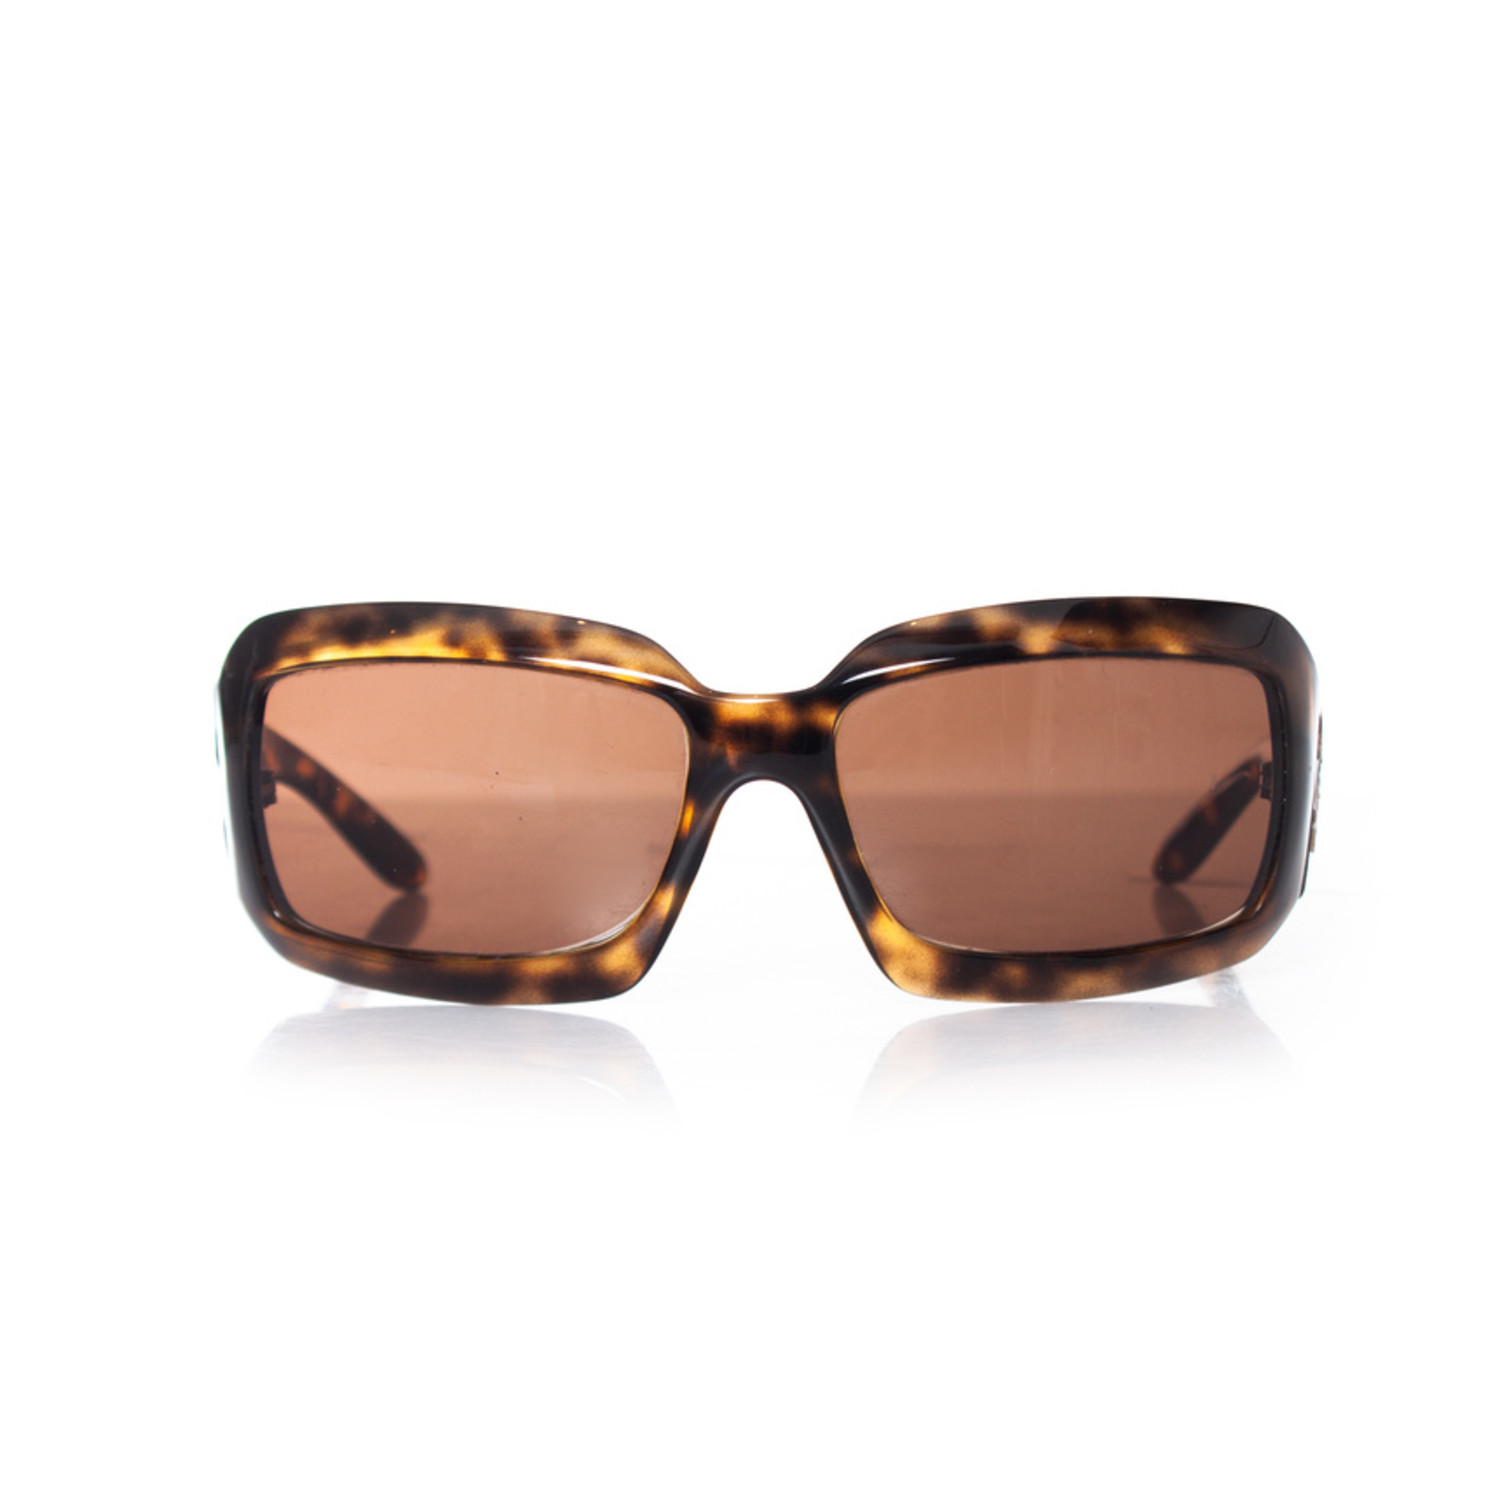 Chanel, Sunglasses with tortoise print - Unique Designer Pieces